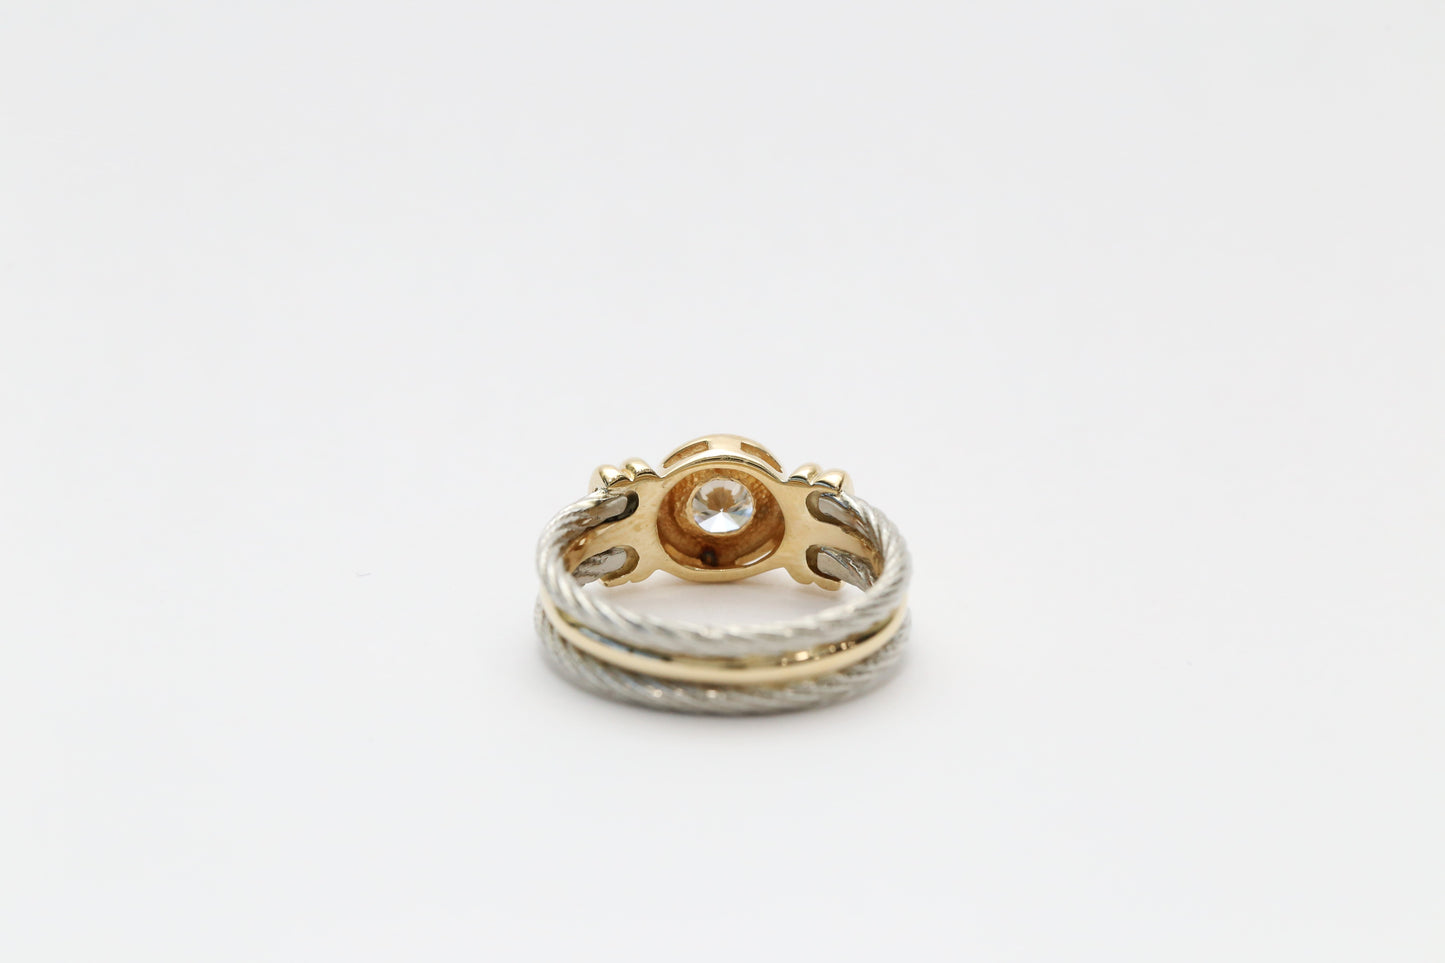 14k Yellow & White Gold Solitaire Diamond Ring, Size 6.5 - 5.2g